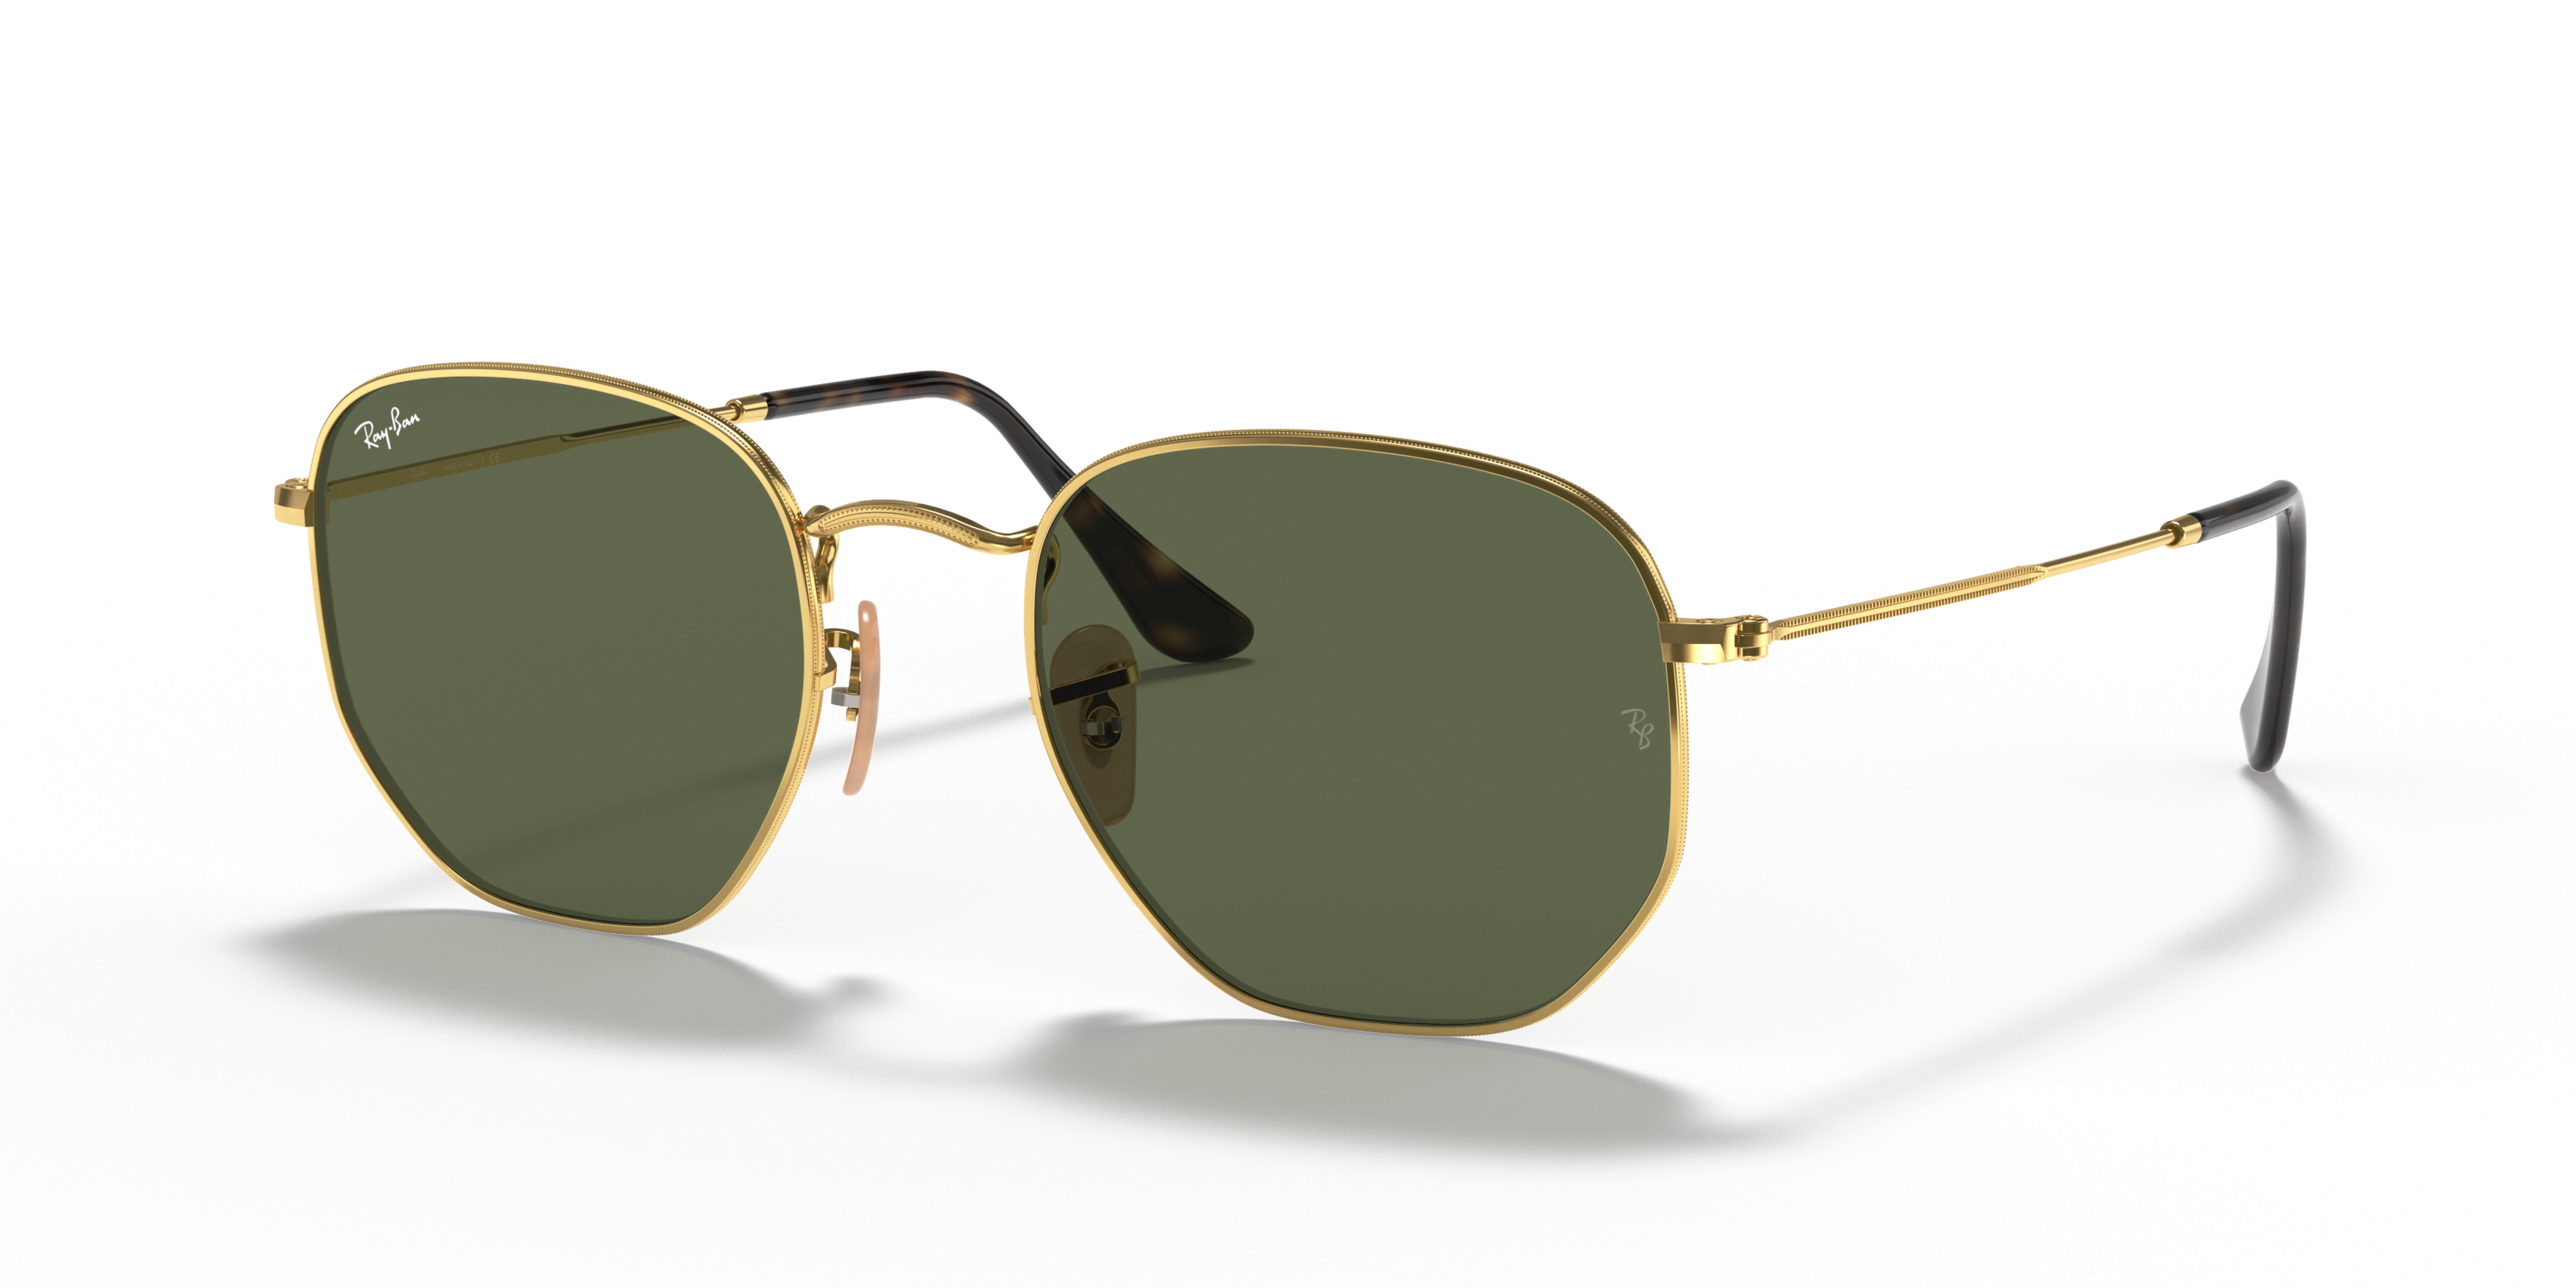 Angle_Left01 Ray-Ban Hexagonal RB 3548N (001) Sunglasses Green / Gold